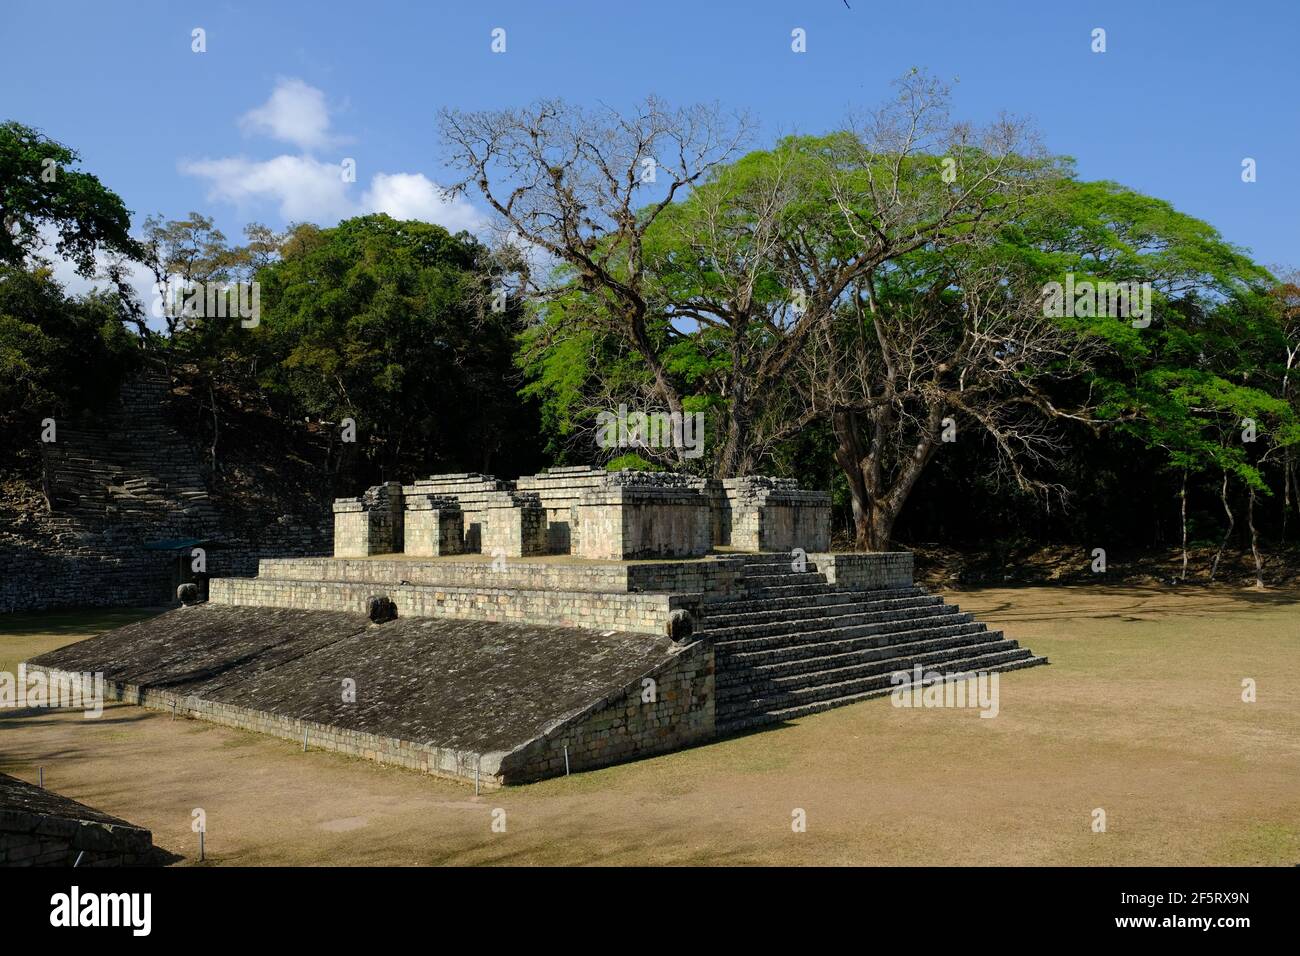 Honduras Copan Ruinas - Sito Archeologico civiltà Maya - campo da baseball Foto Stock